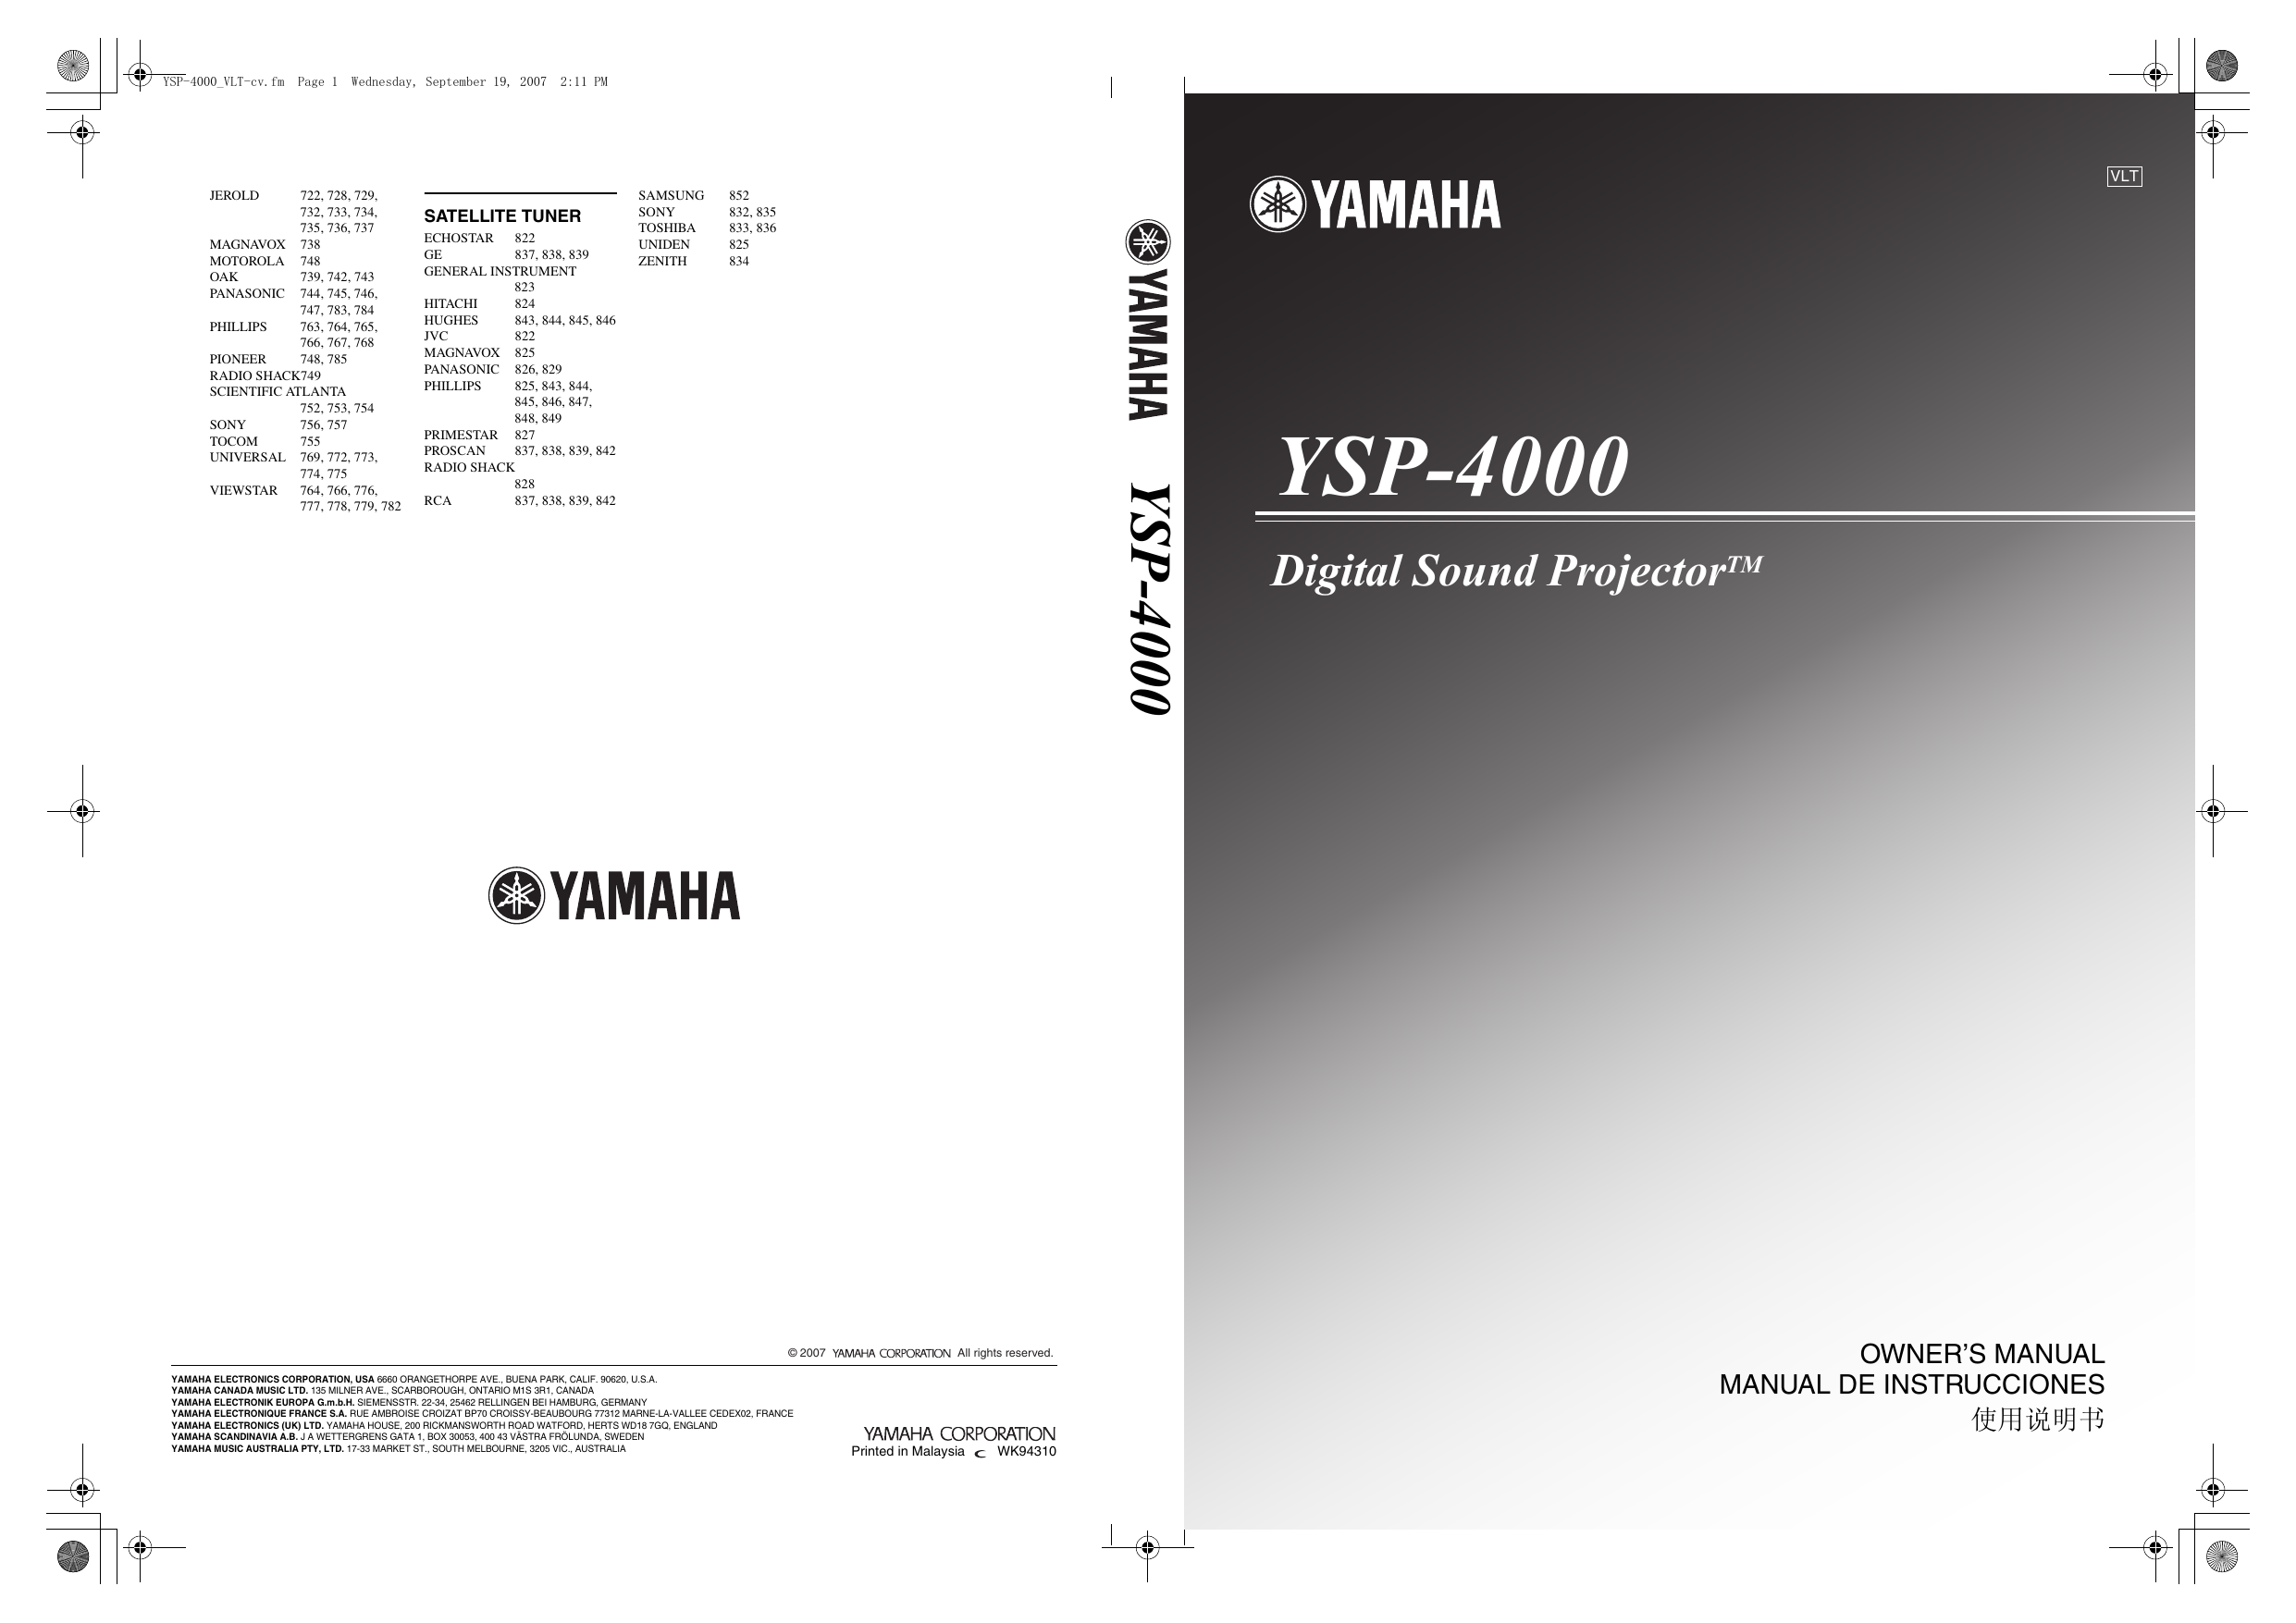 678 US Copy Technics  Bedienungsanleitung user manual owners manual  für RS 